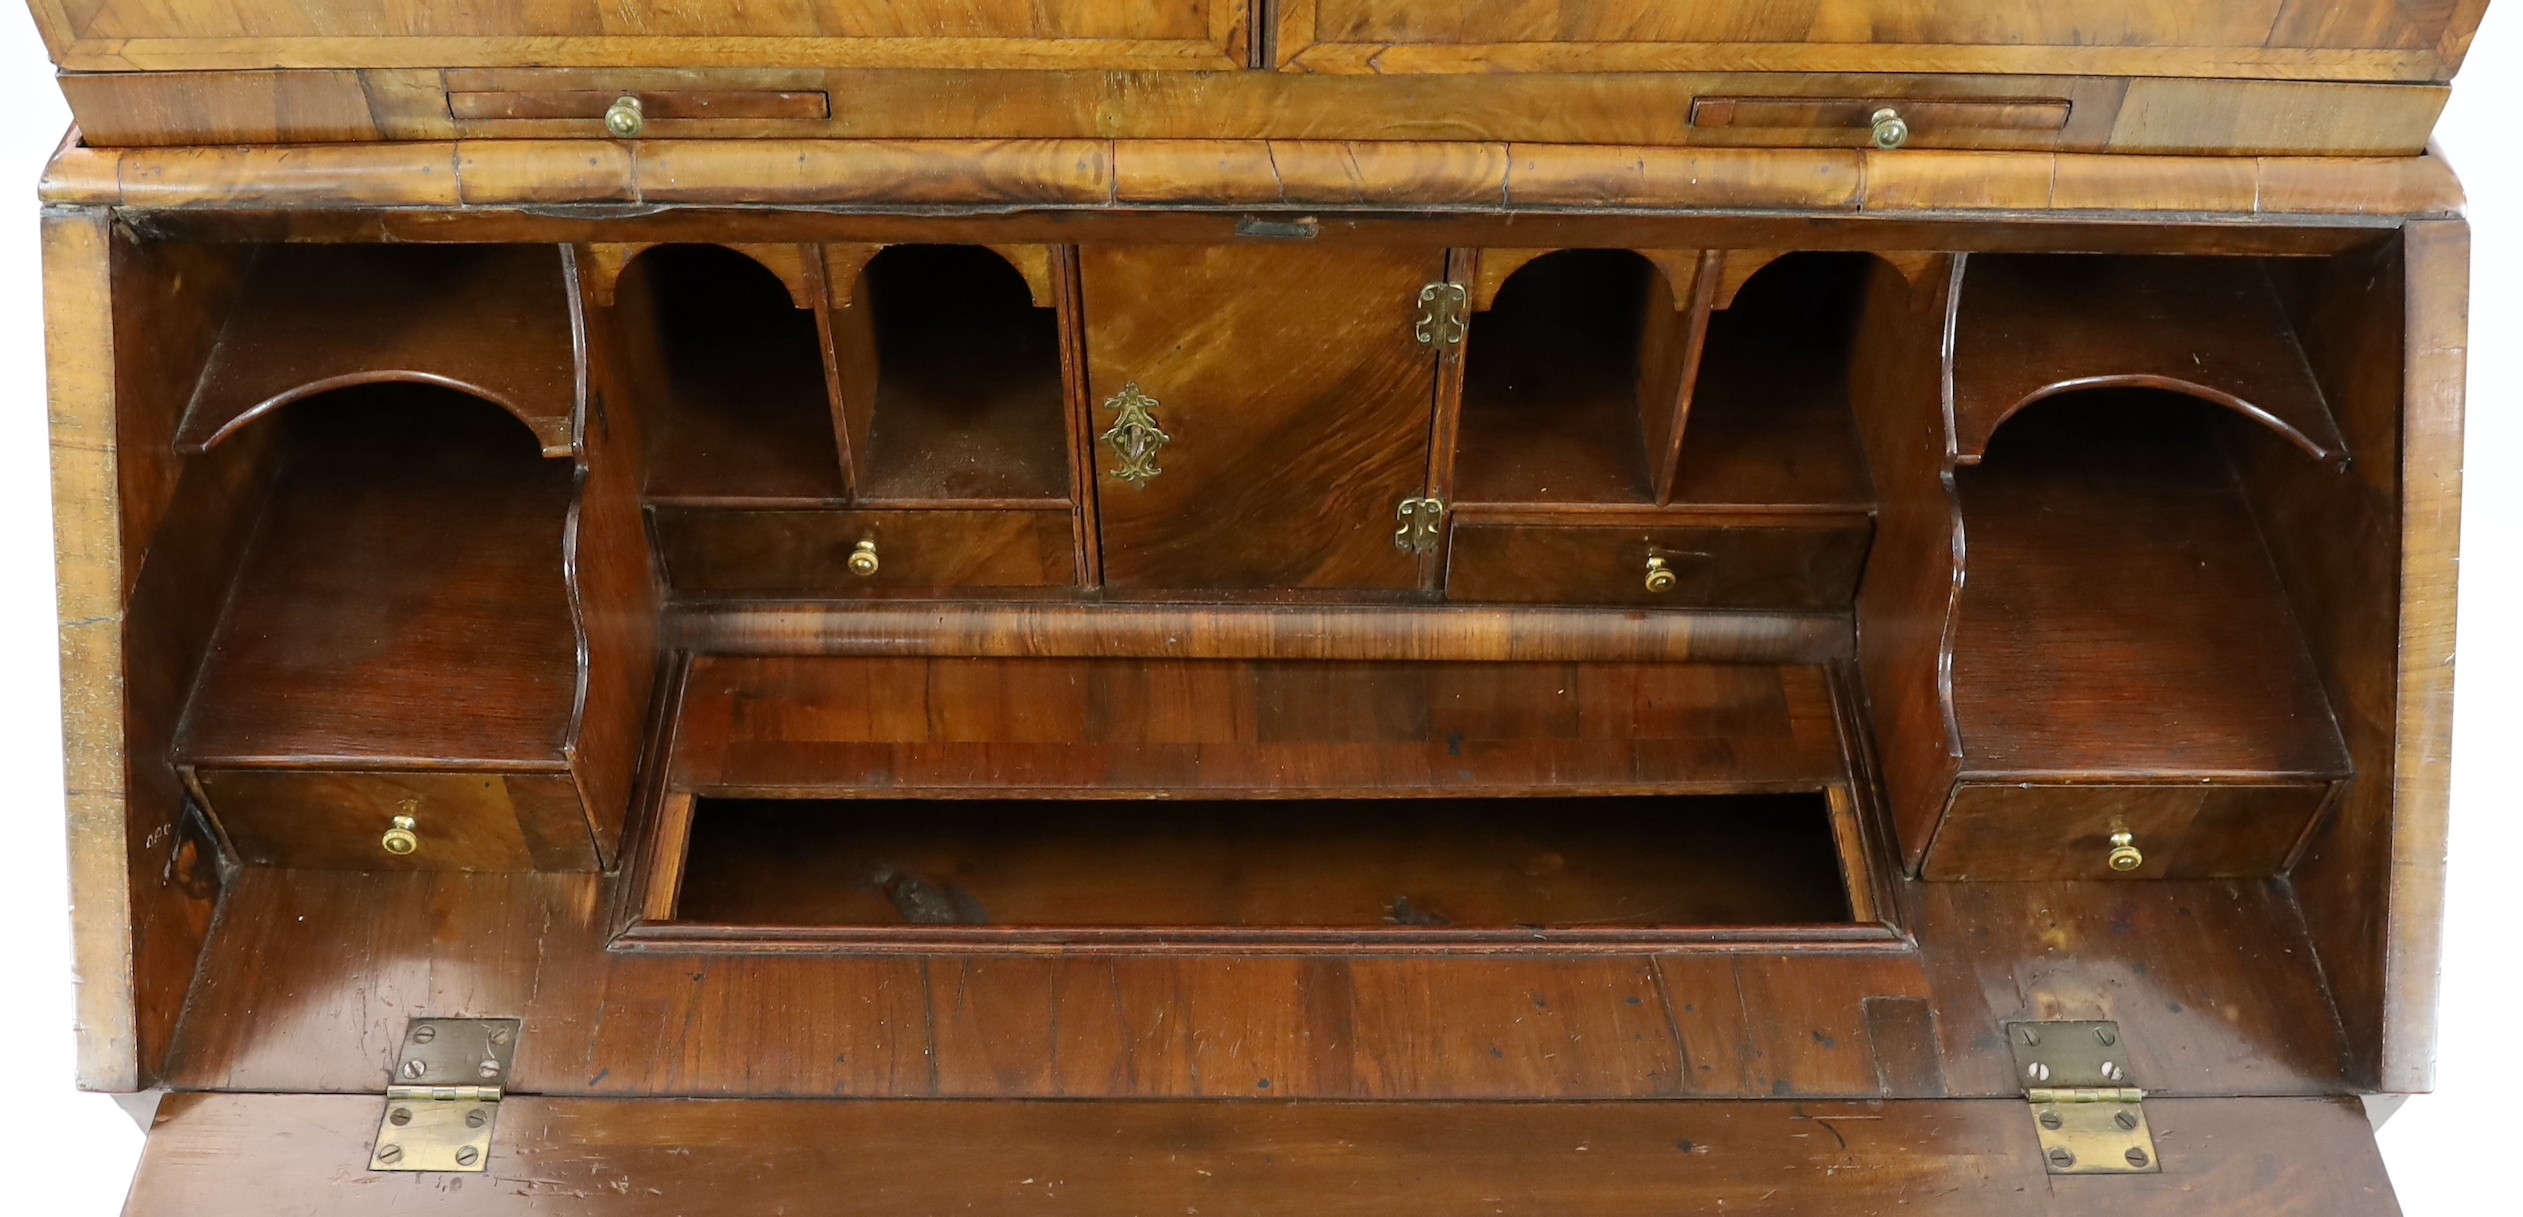 An early 18th century feather banded walnut bureau bookcase, width 96cm depth 57cm height 198cm